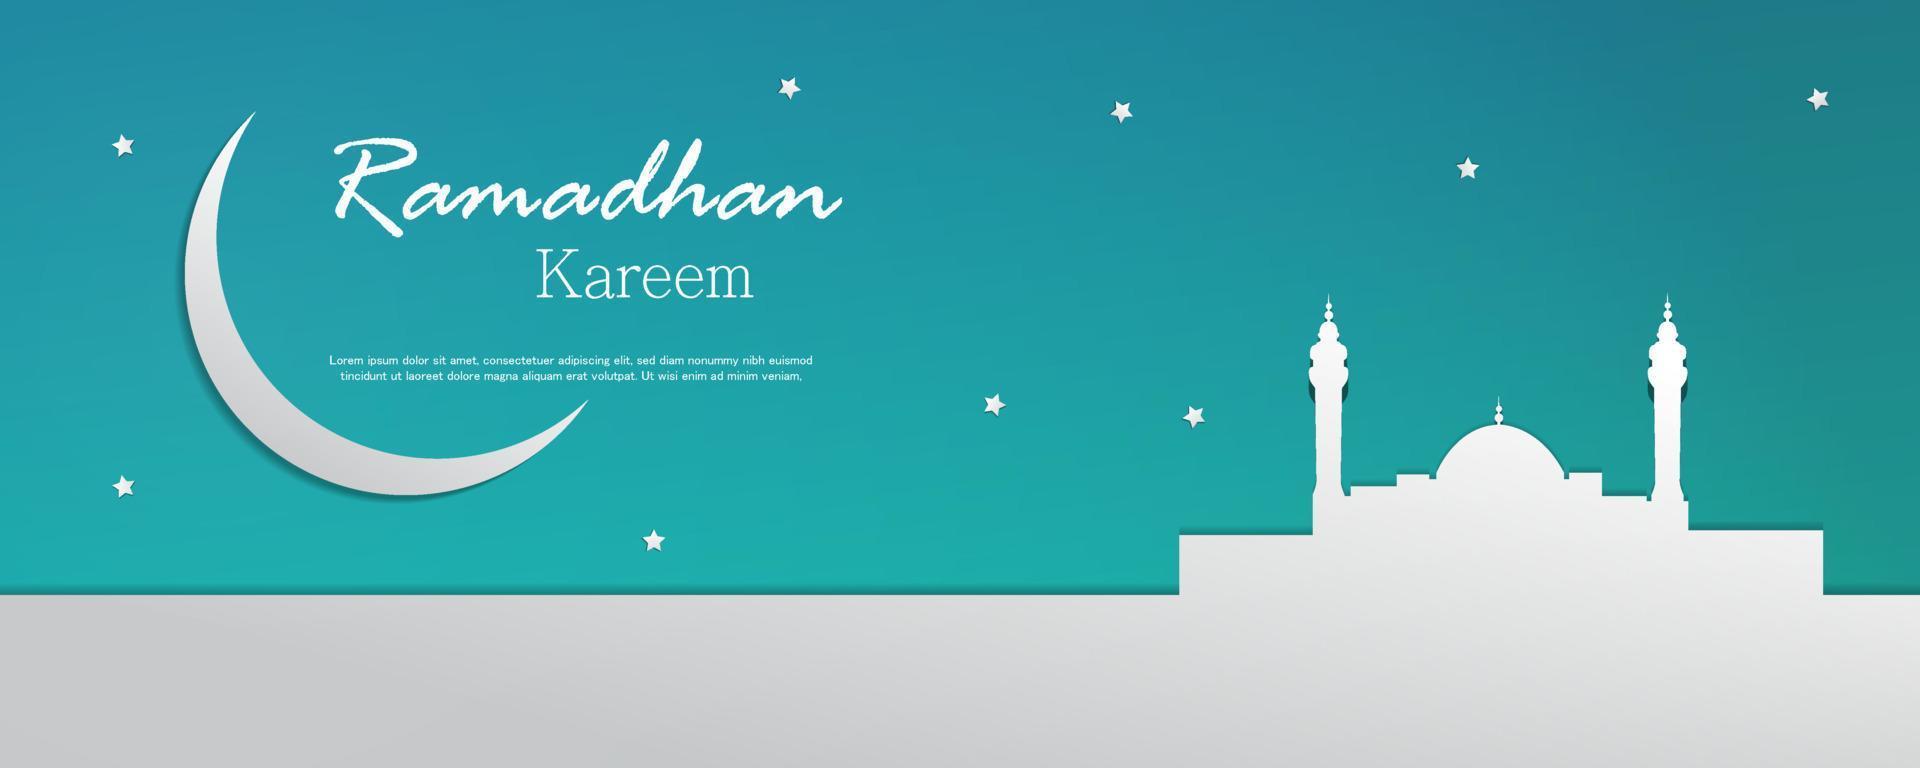 plantilla de banner horizontal ramadhan kareem vector